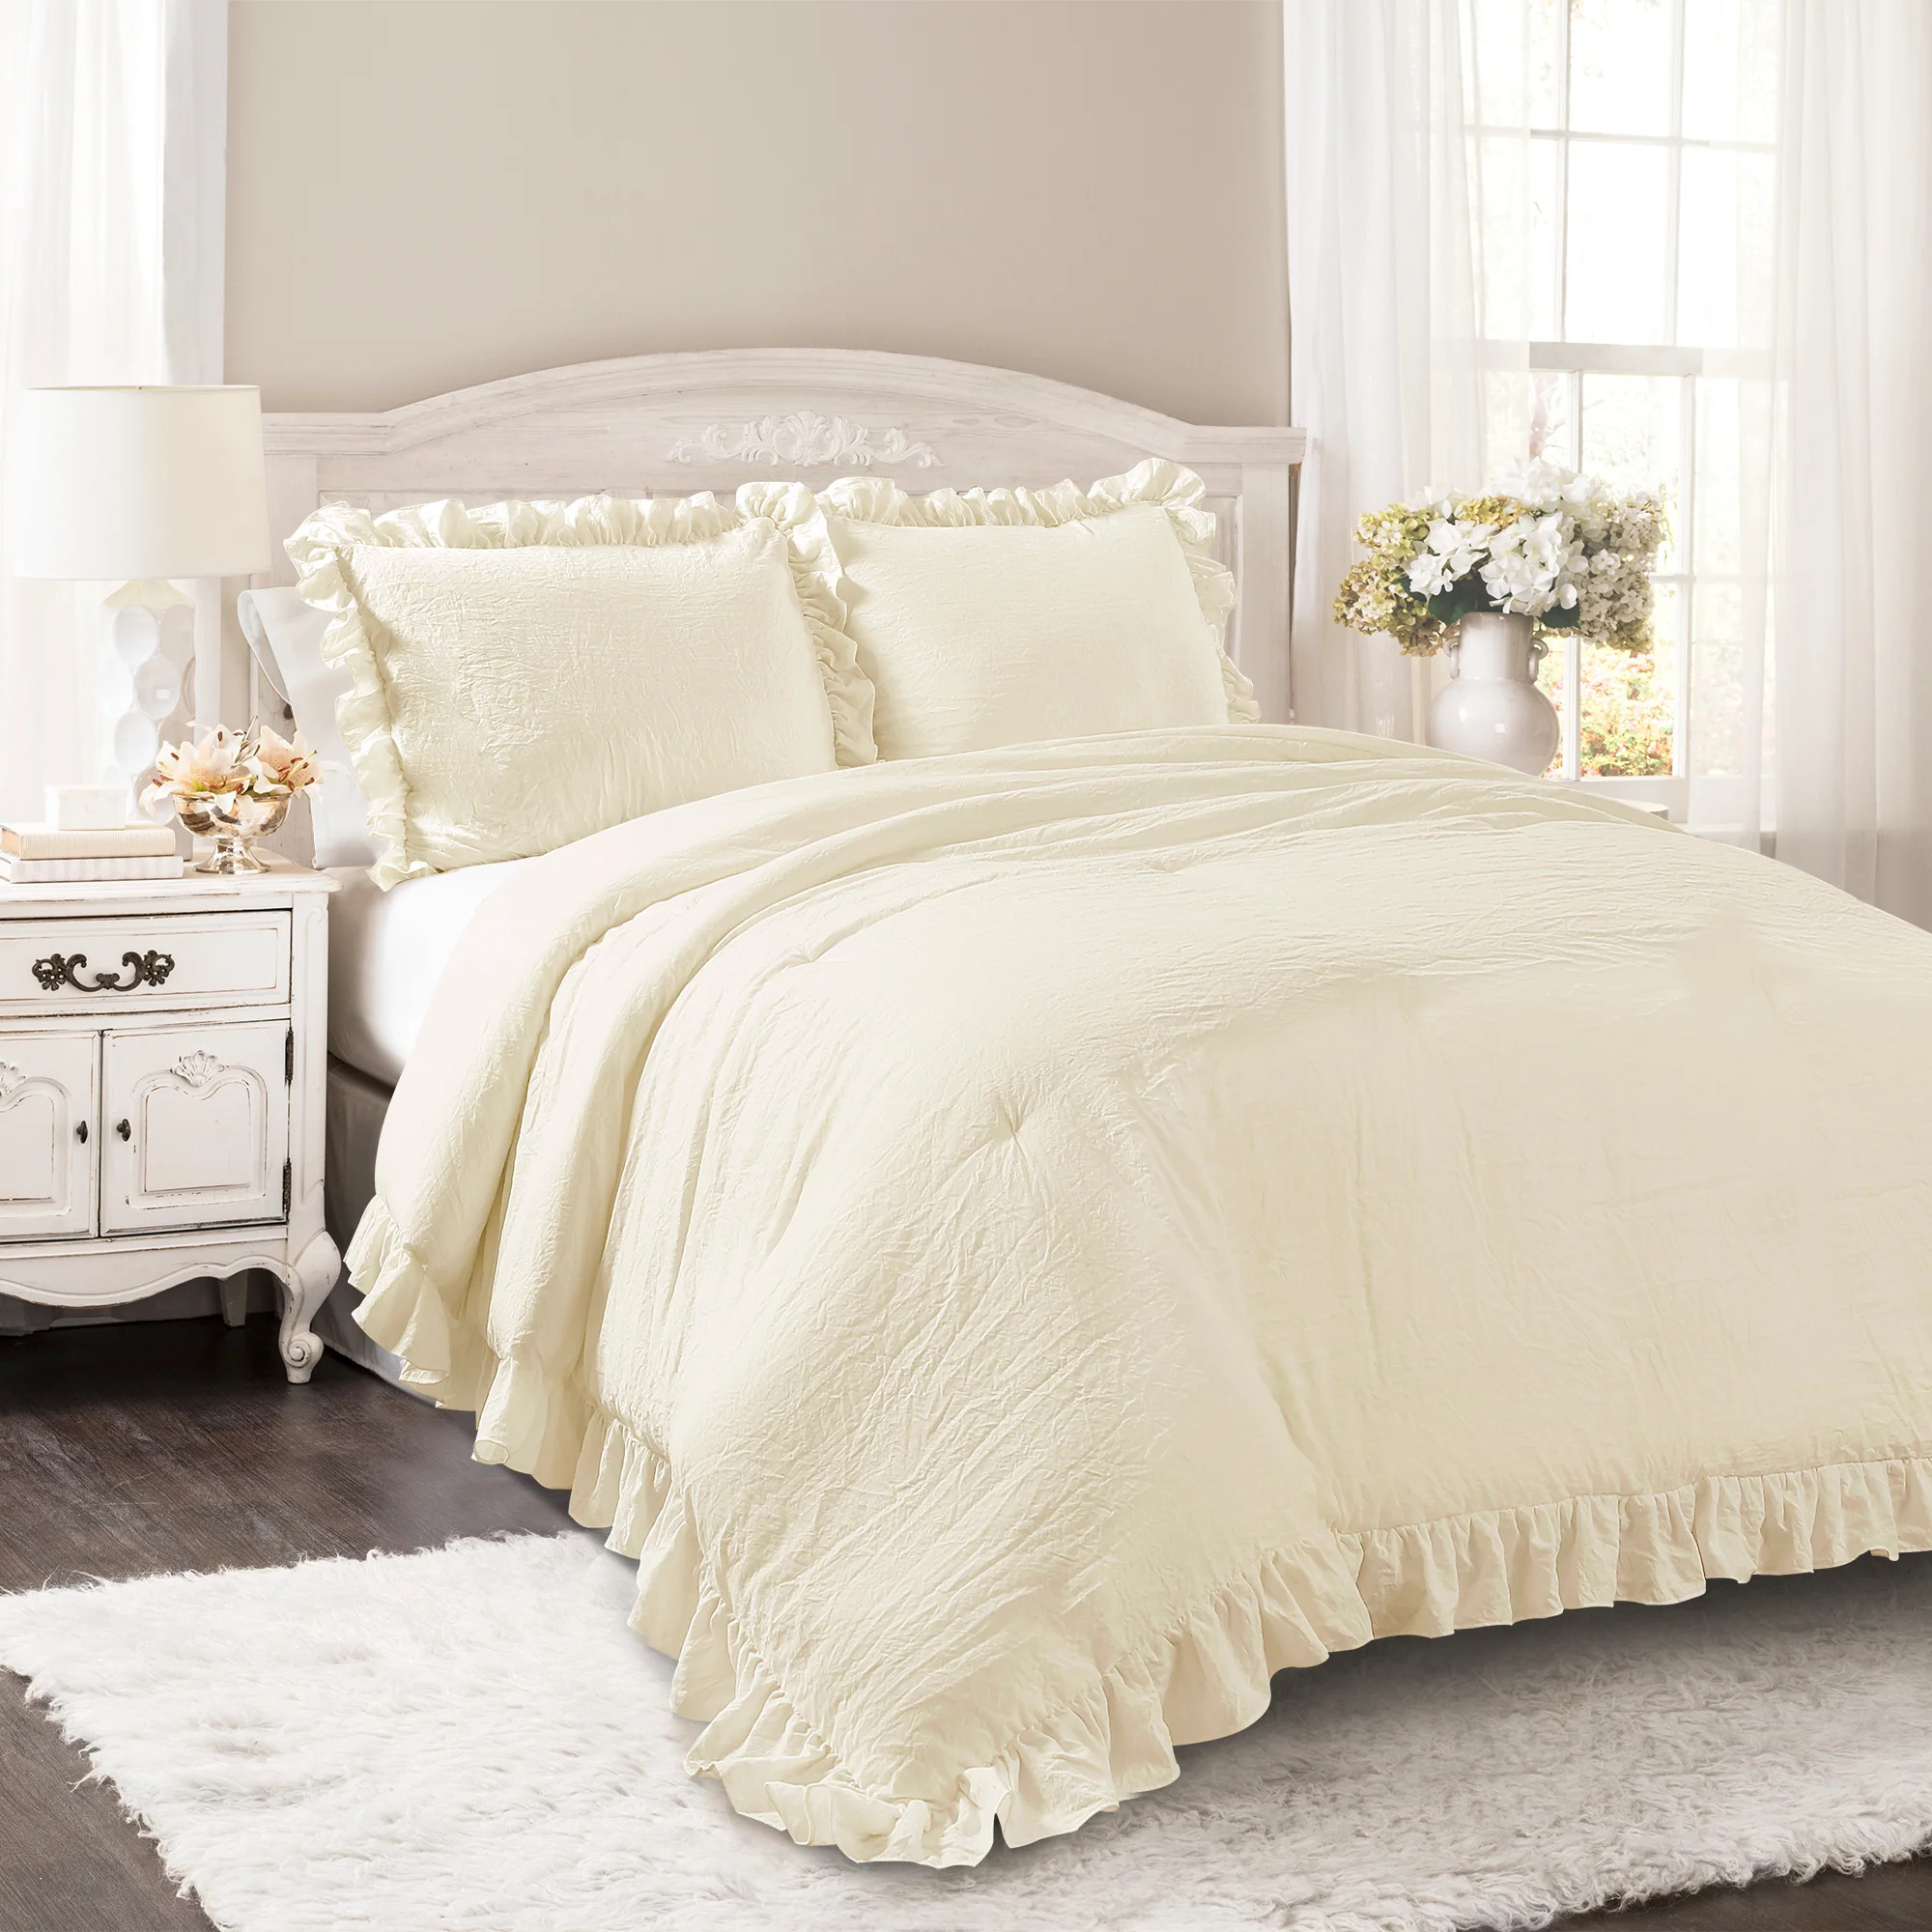 Lush Decor 3 Piece Comforter Sets, King with Pillow Shams - image 3 of 10